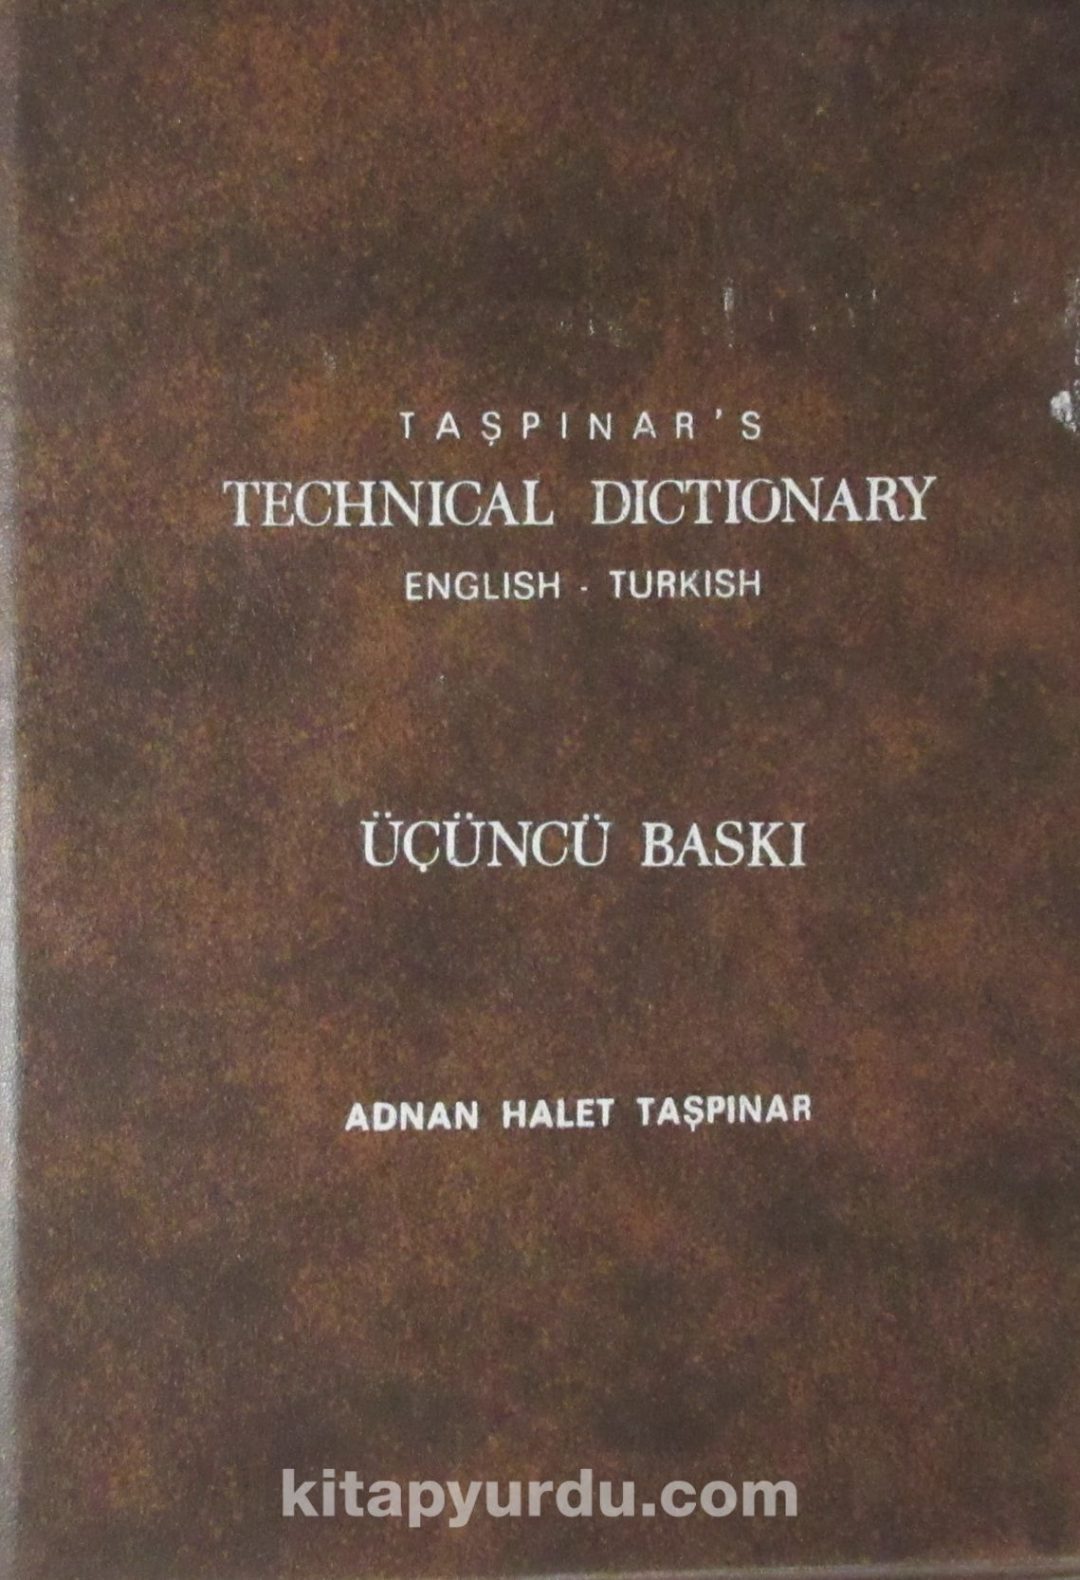 Taşpınar's Technical Dictionary English-Turkish (1-I-32)